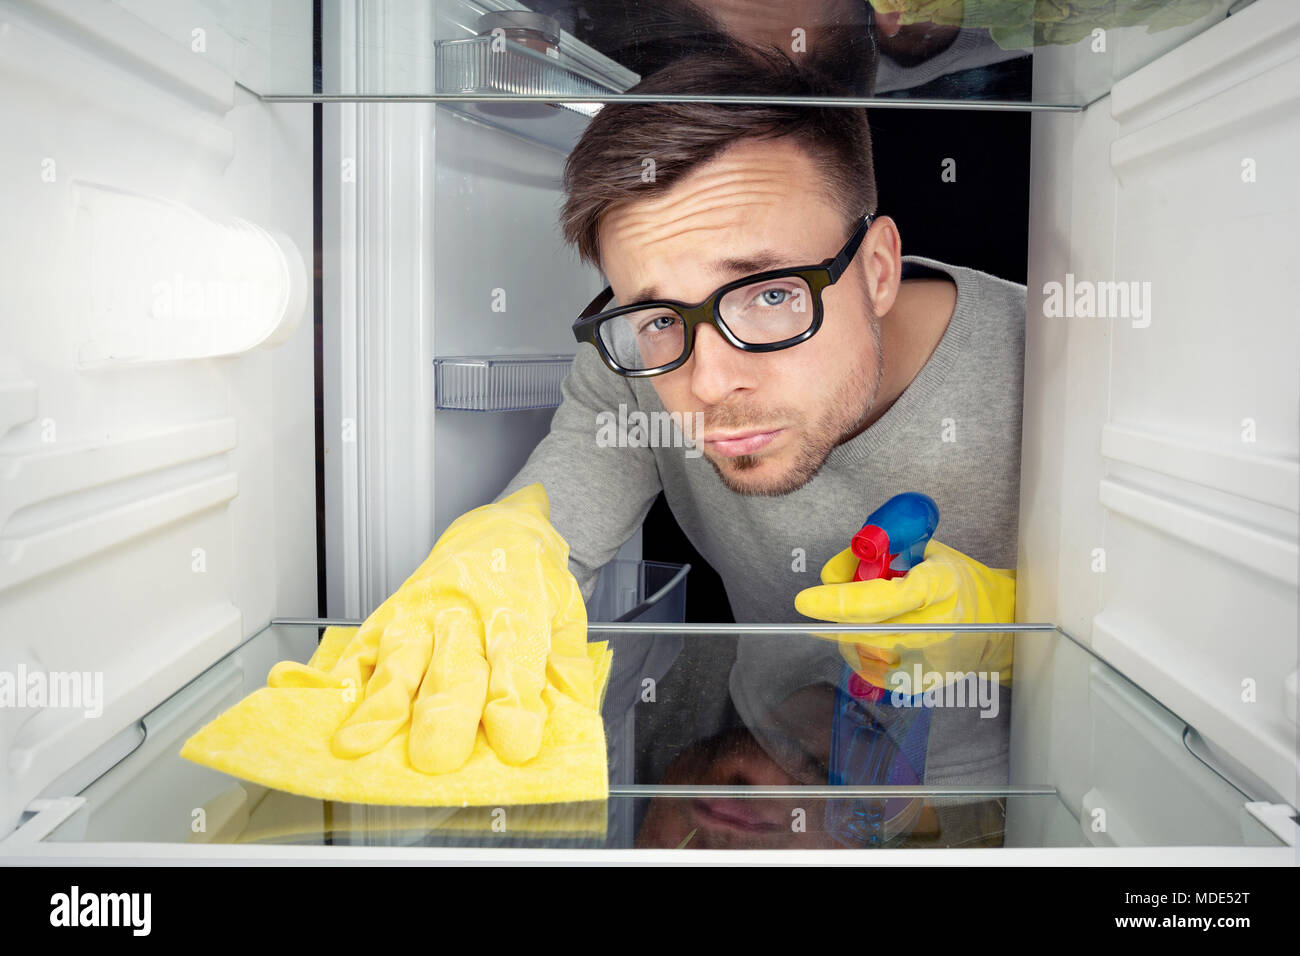 Man cleaning the fridge Stock Photo